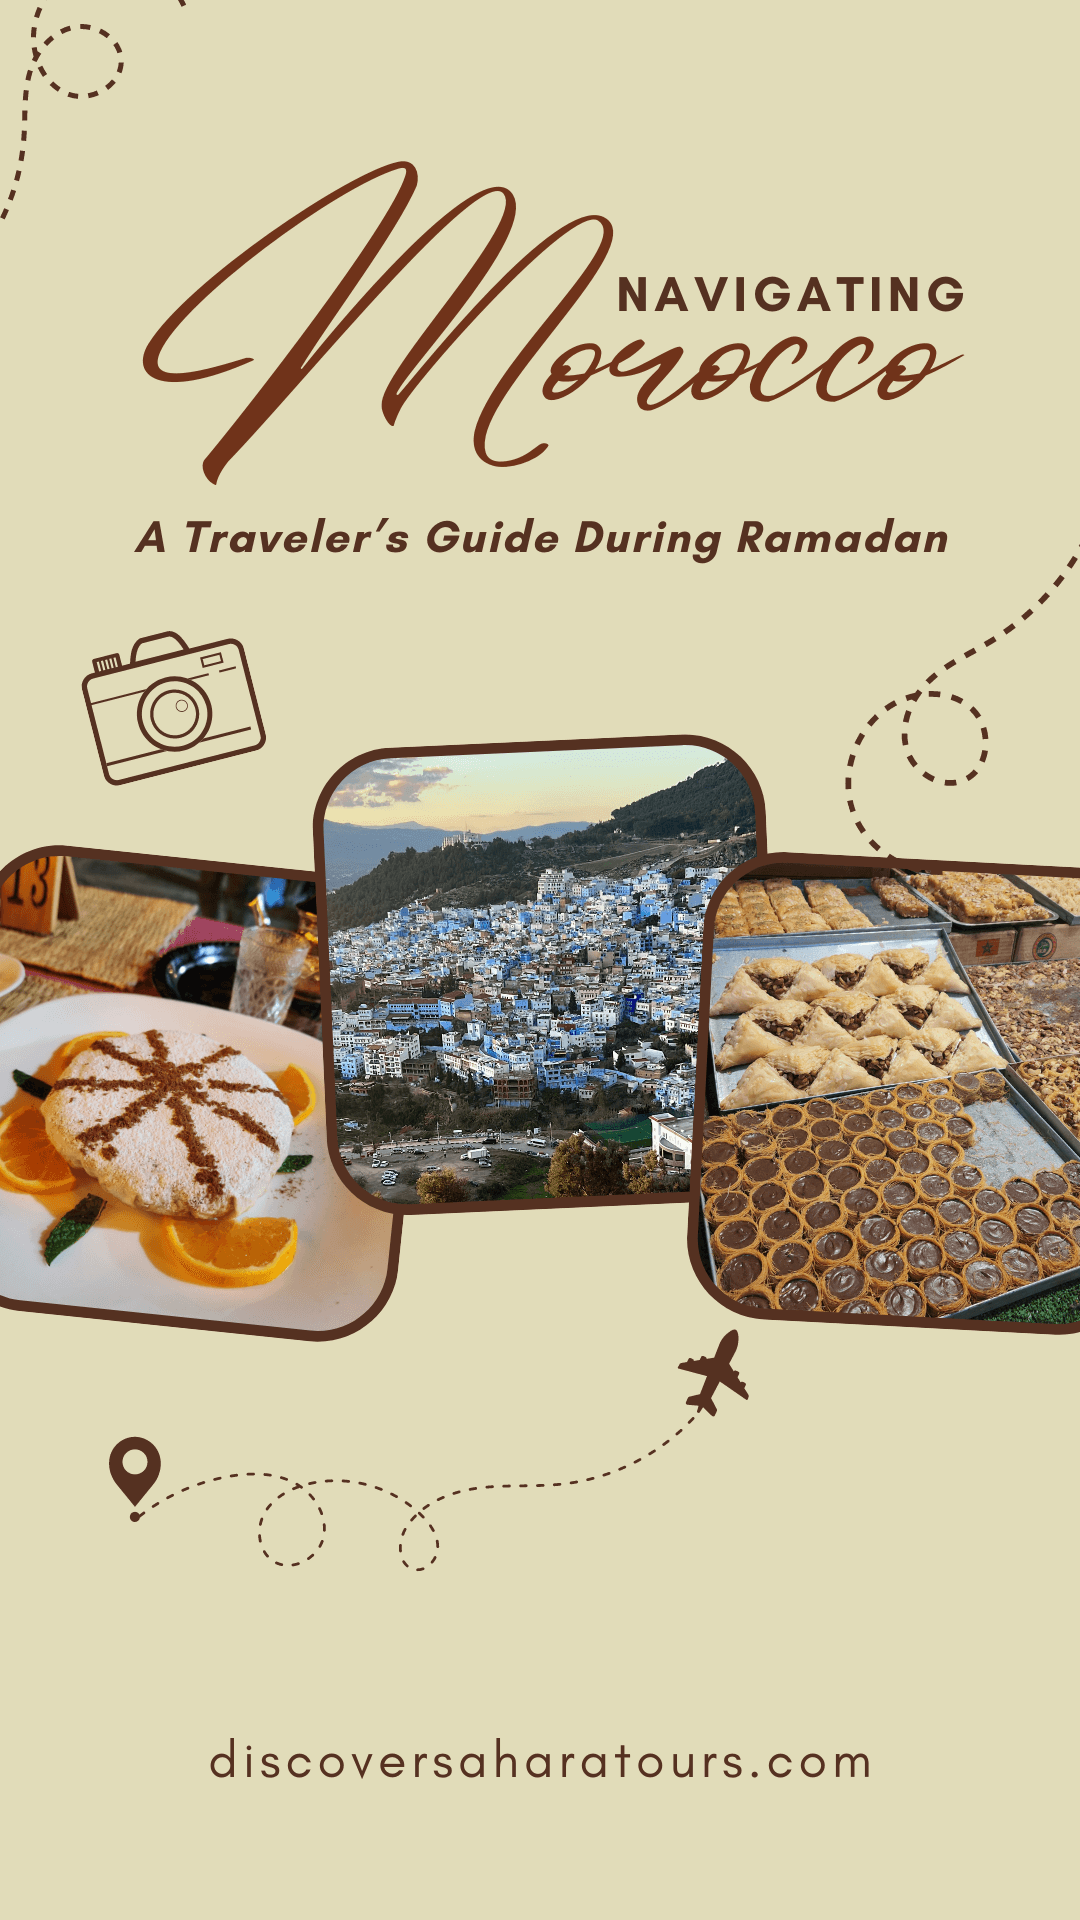 Navigating Morocco A Traveler’s Guide During Ramadan